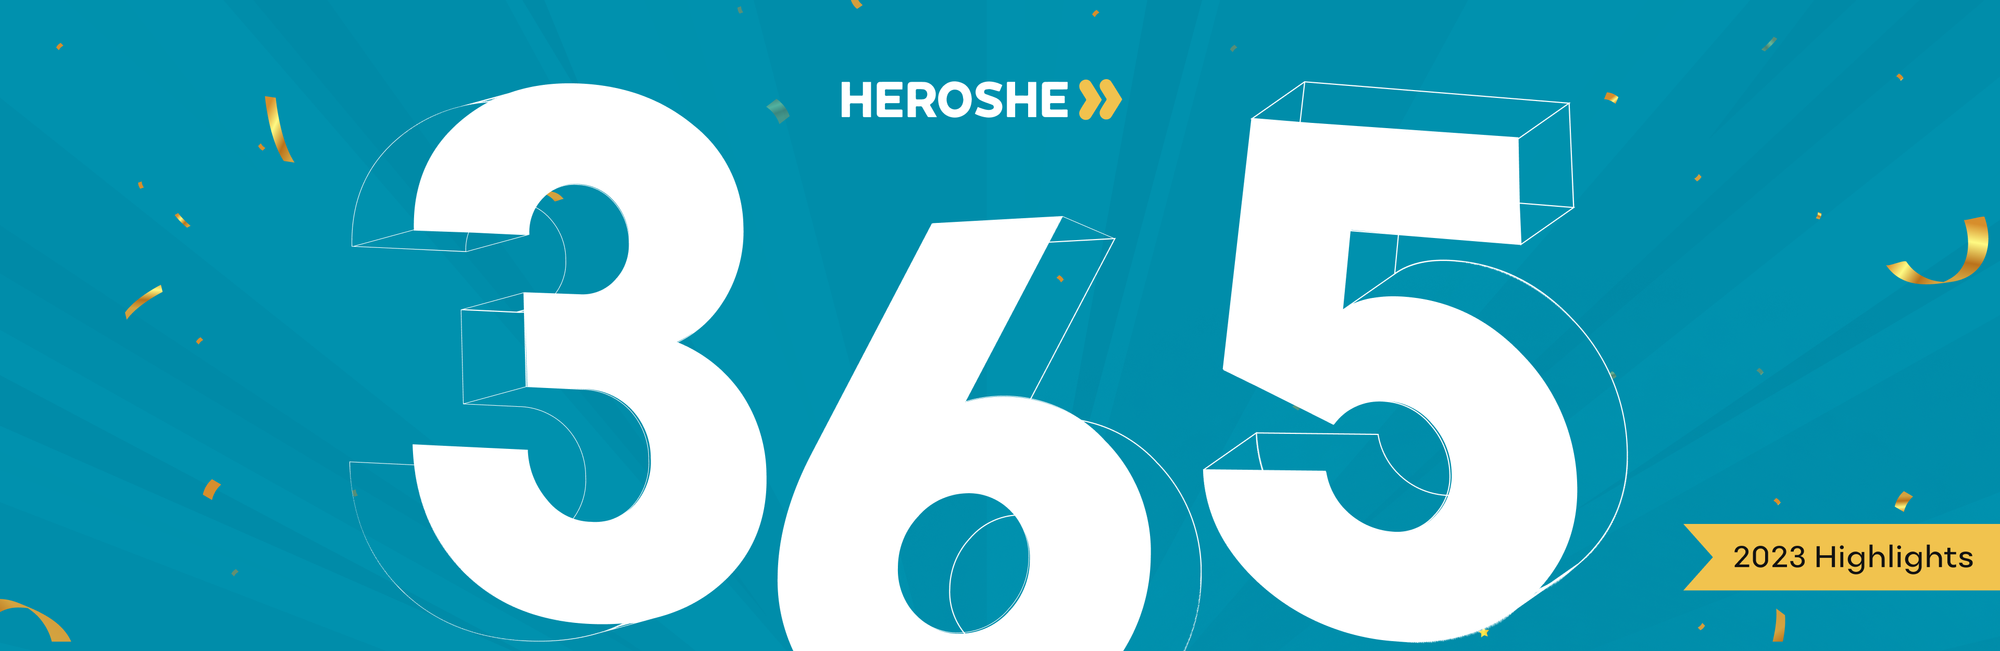 Heroshe 365: Celebrating Your 2023 Year in Review